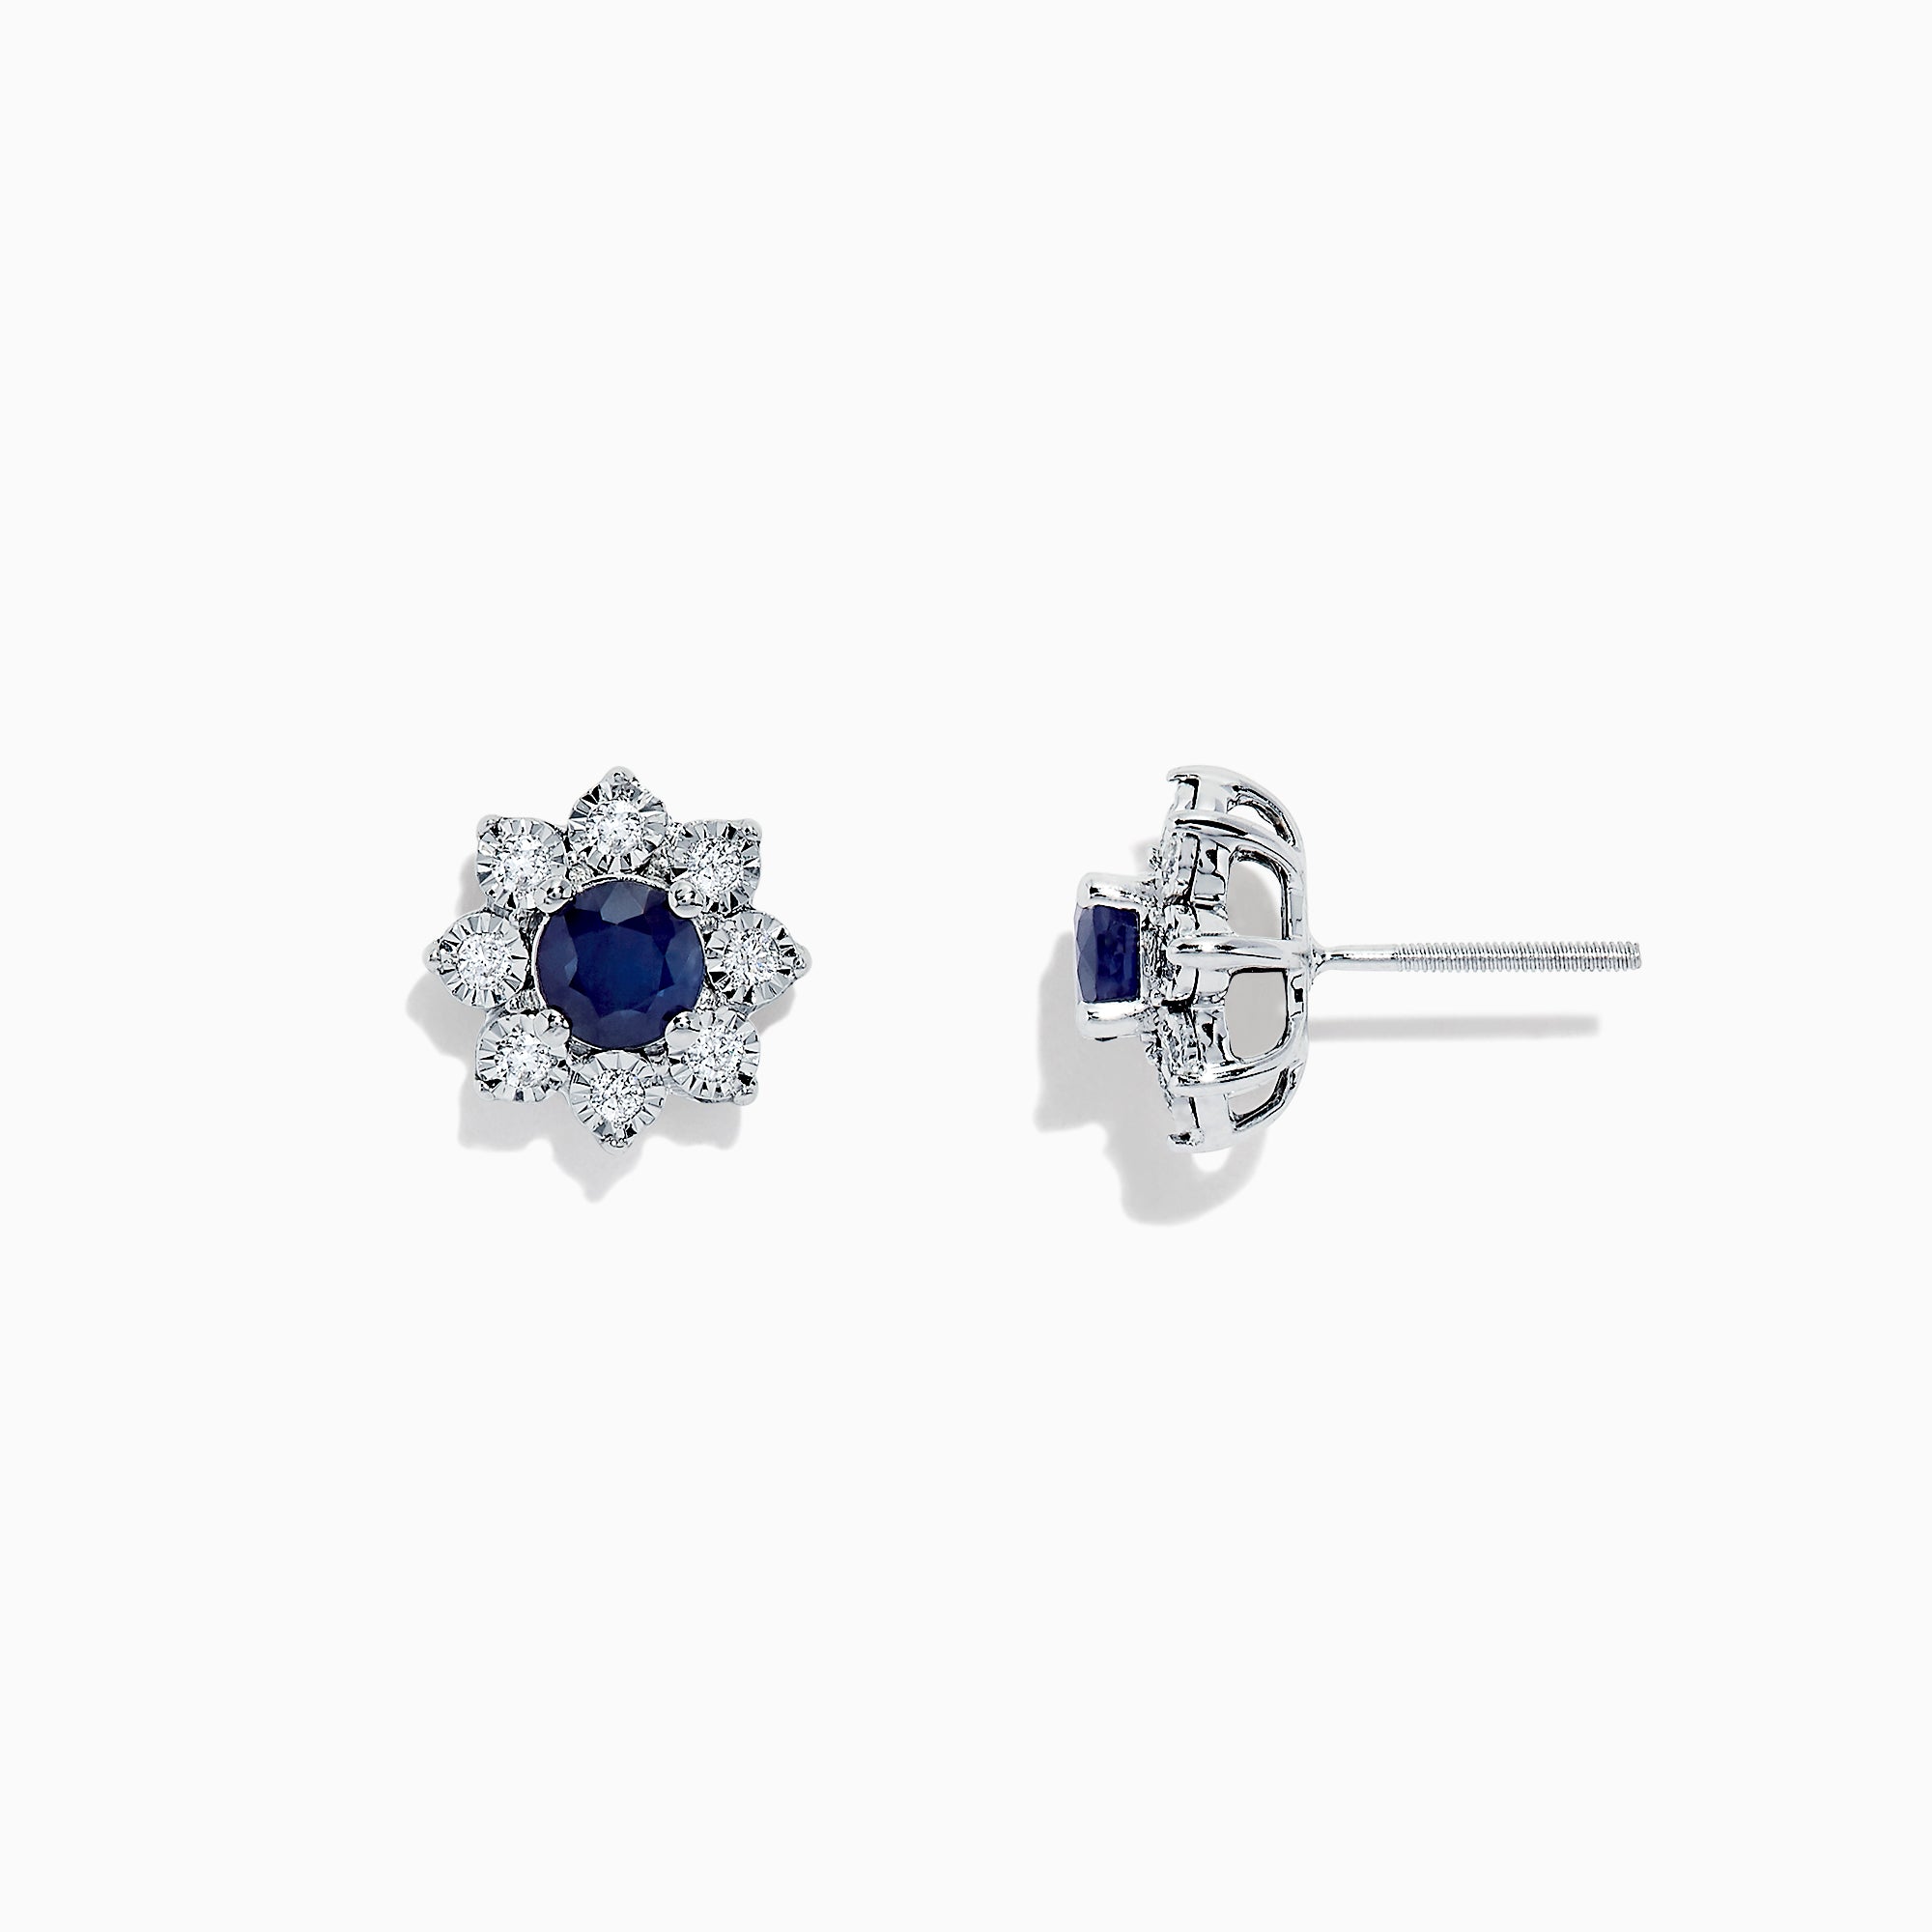 Effy Royale Bleu 14K White Gold Sapphire and Diamond Earrings, 1.44 TCW